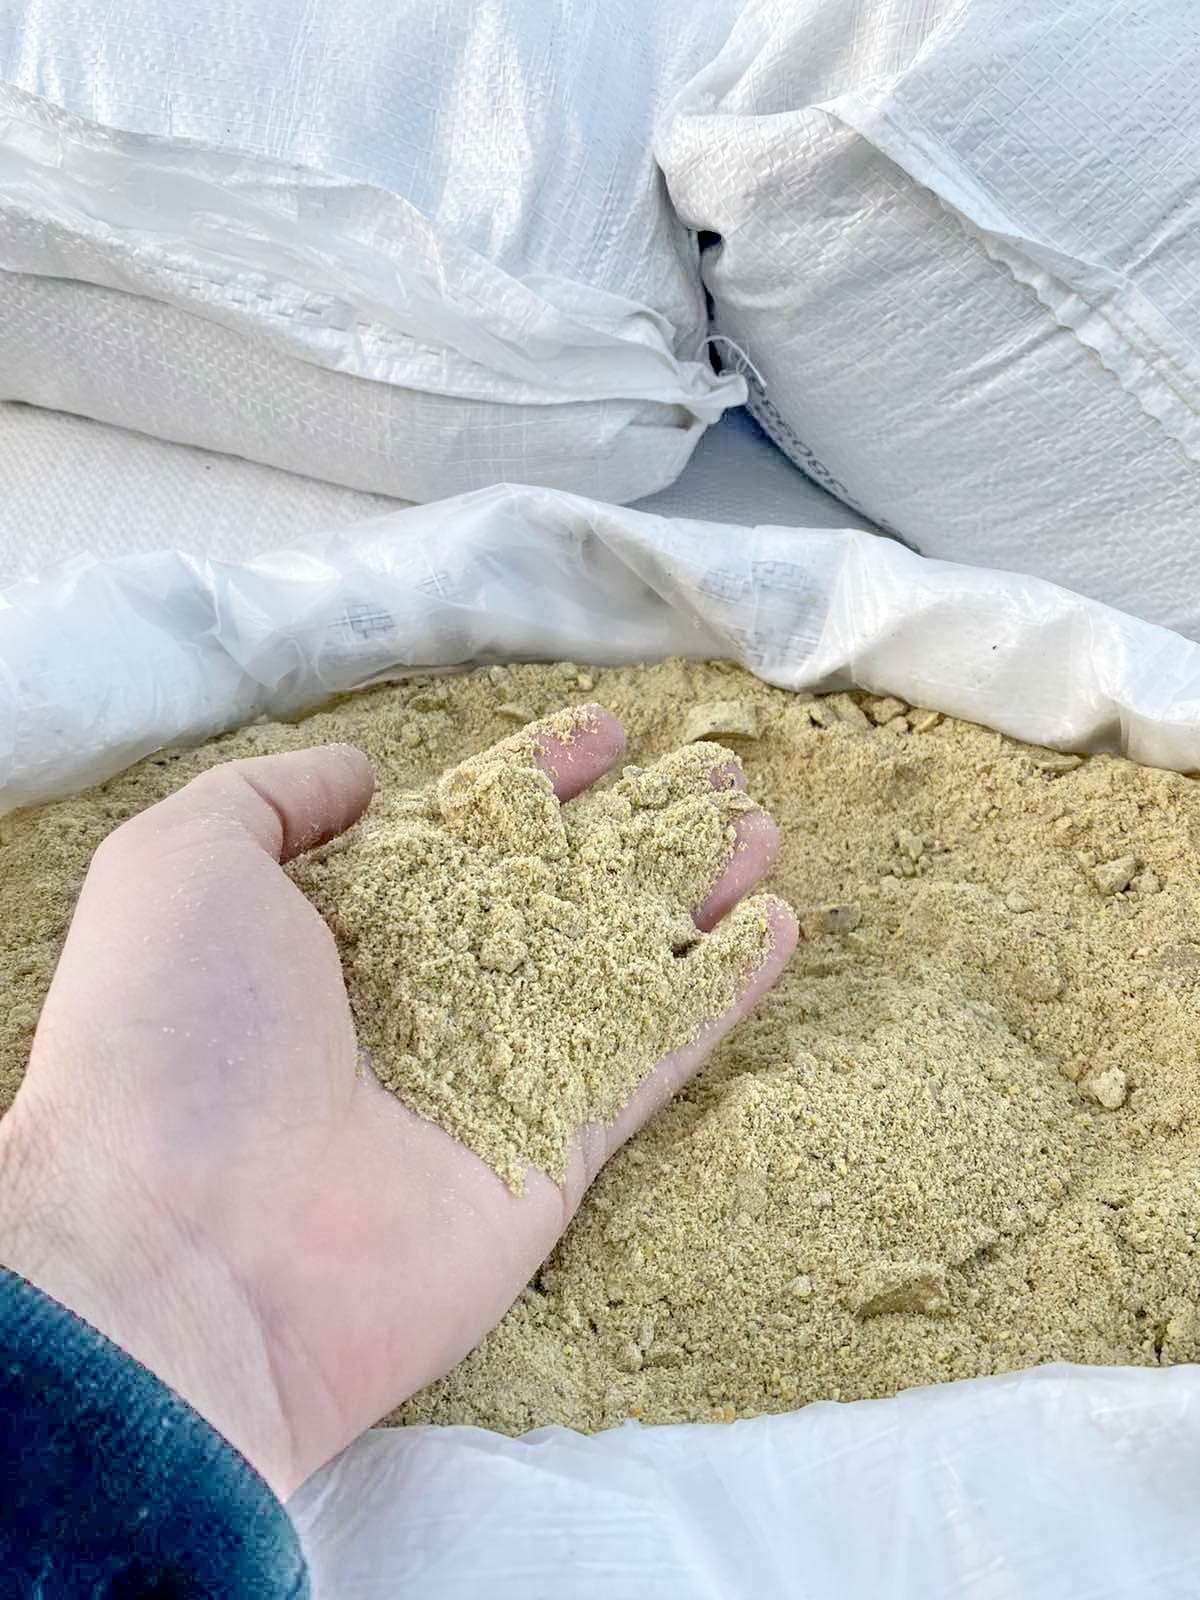 зерно пшеница кукуруза ячмень овес макуха шрот соевый отруби